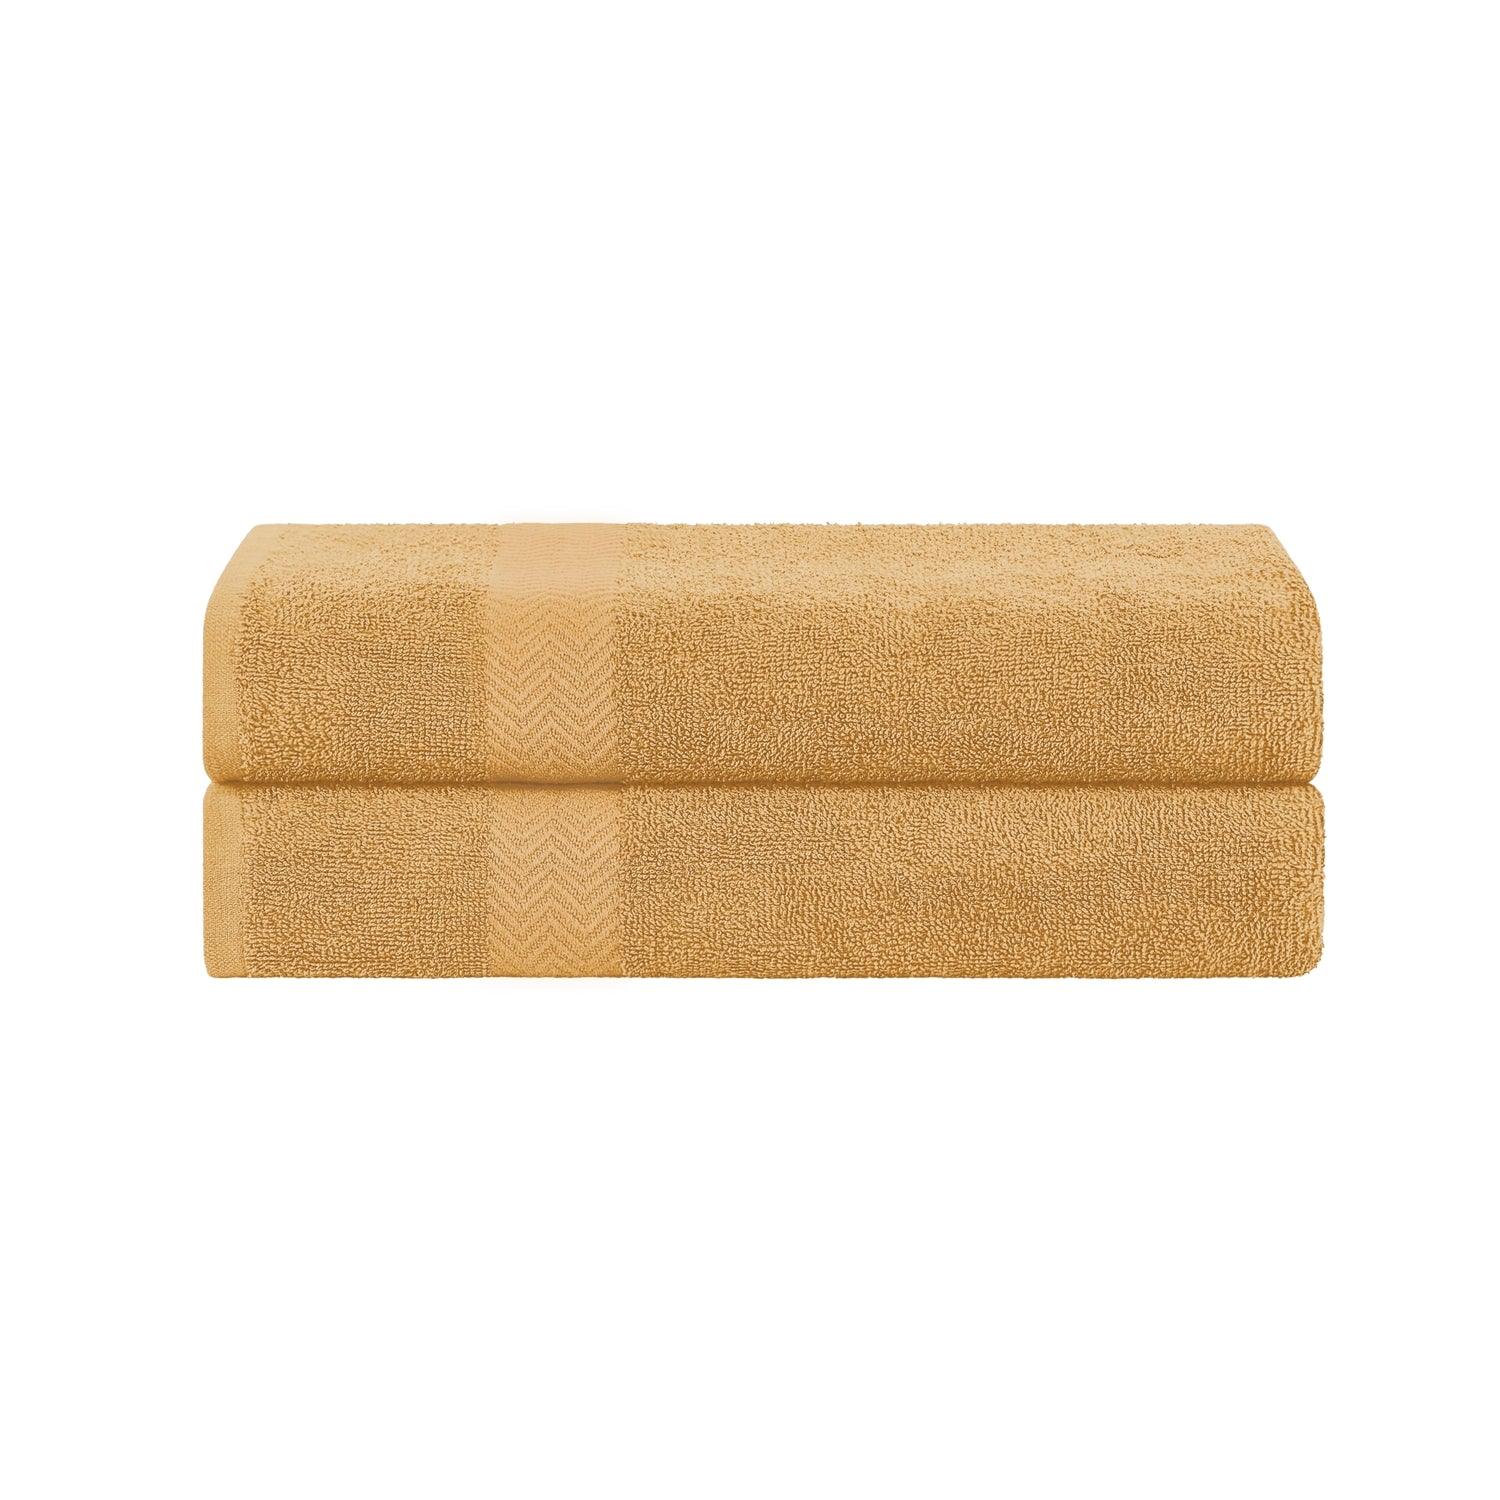 Superior Cotton Large Towels Eco-Friendly Bathroom Essentials 2-Piece Bath Sheet Set - Gold